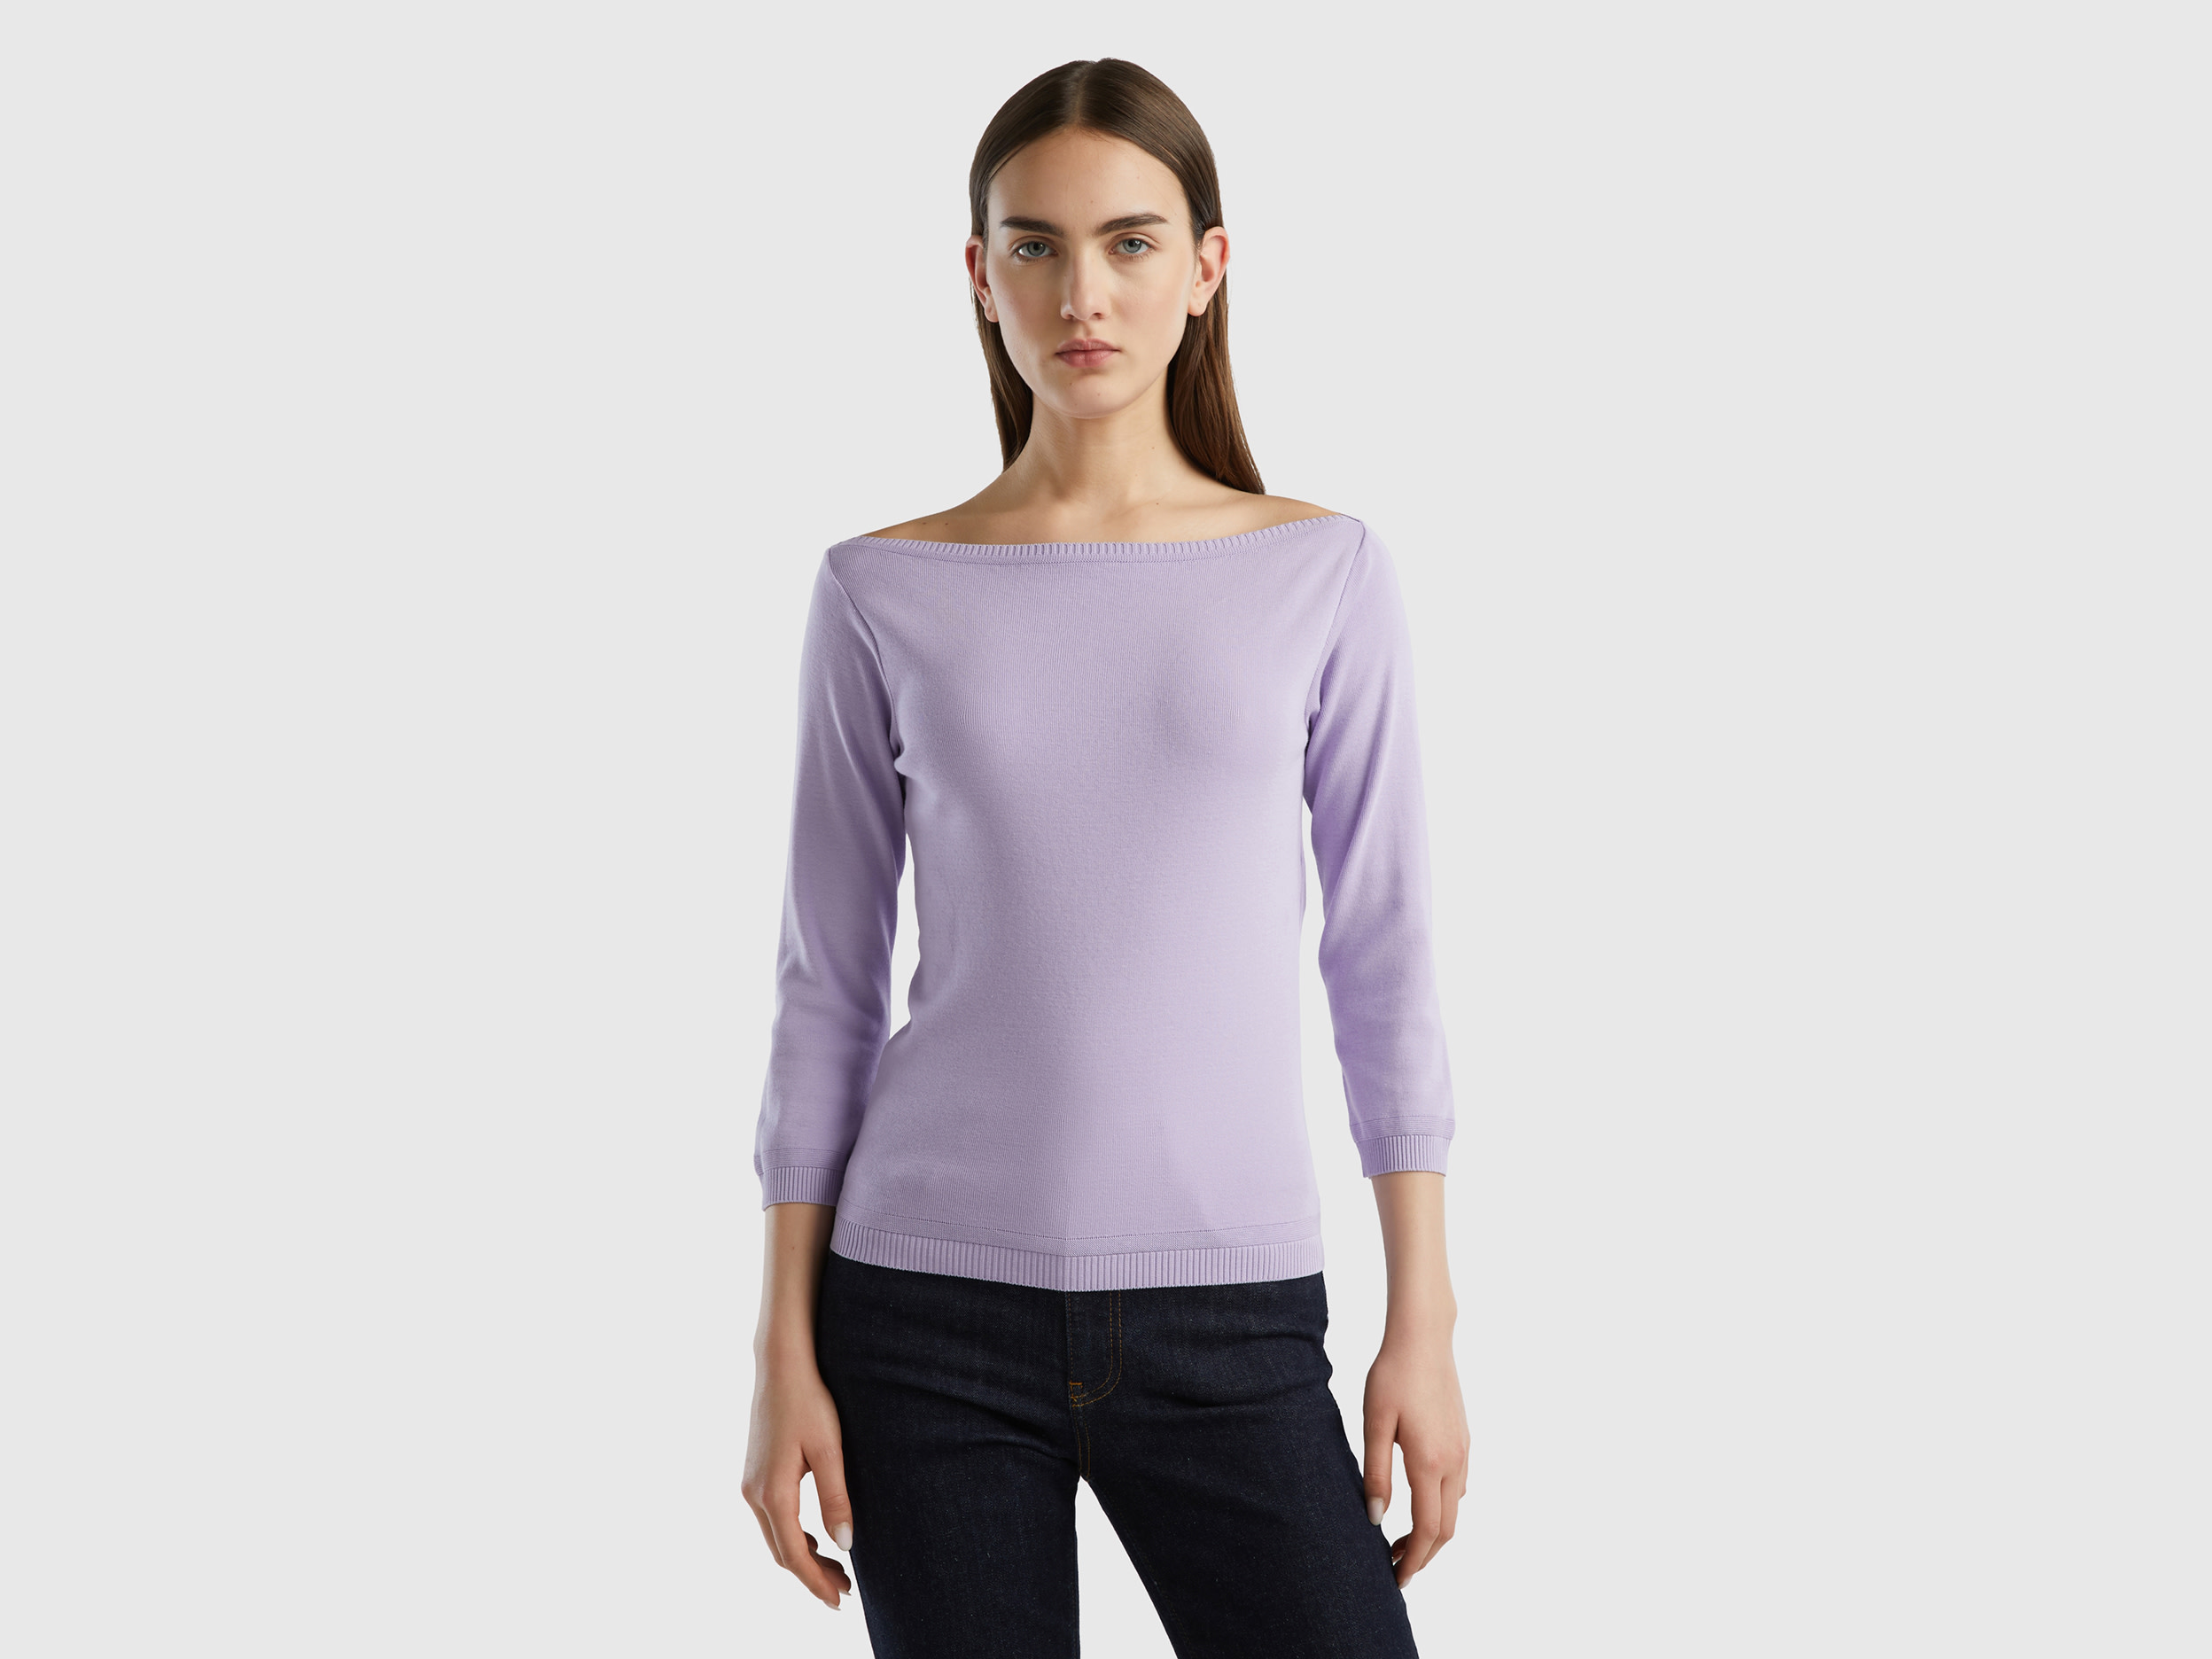 Benetton, 100% Cotton Boat Neck Sweater, size S, Lilac, Women